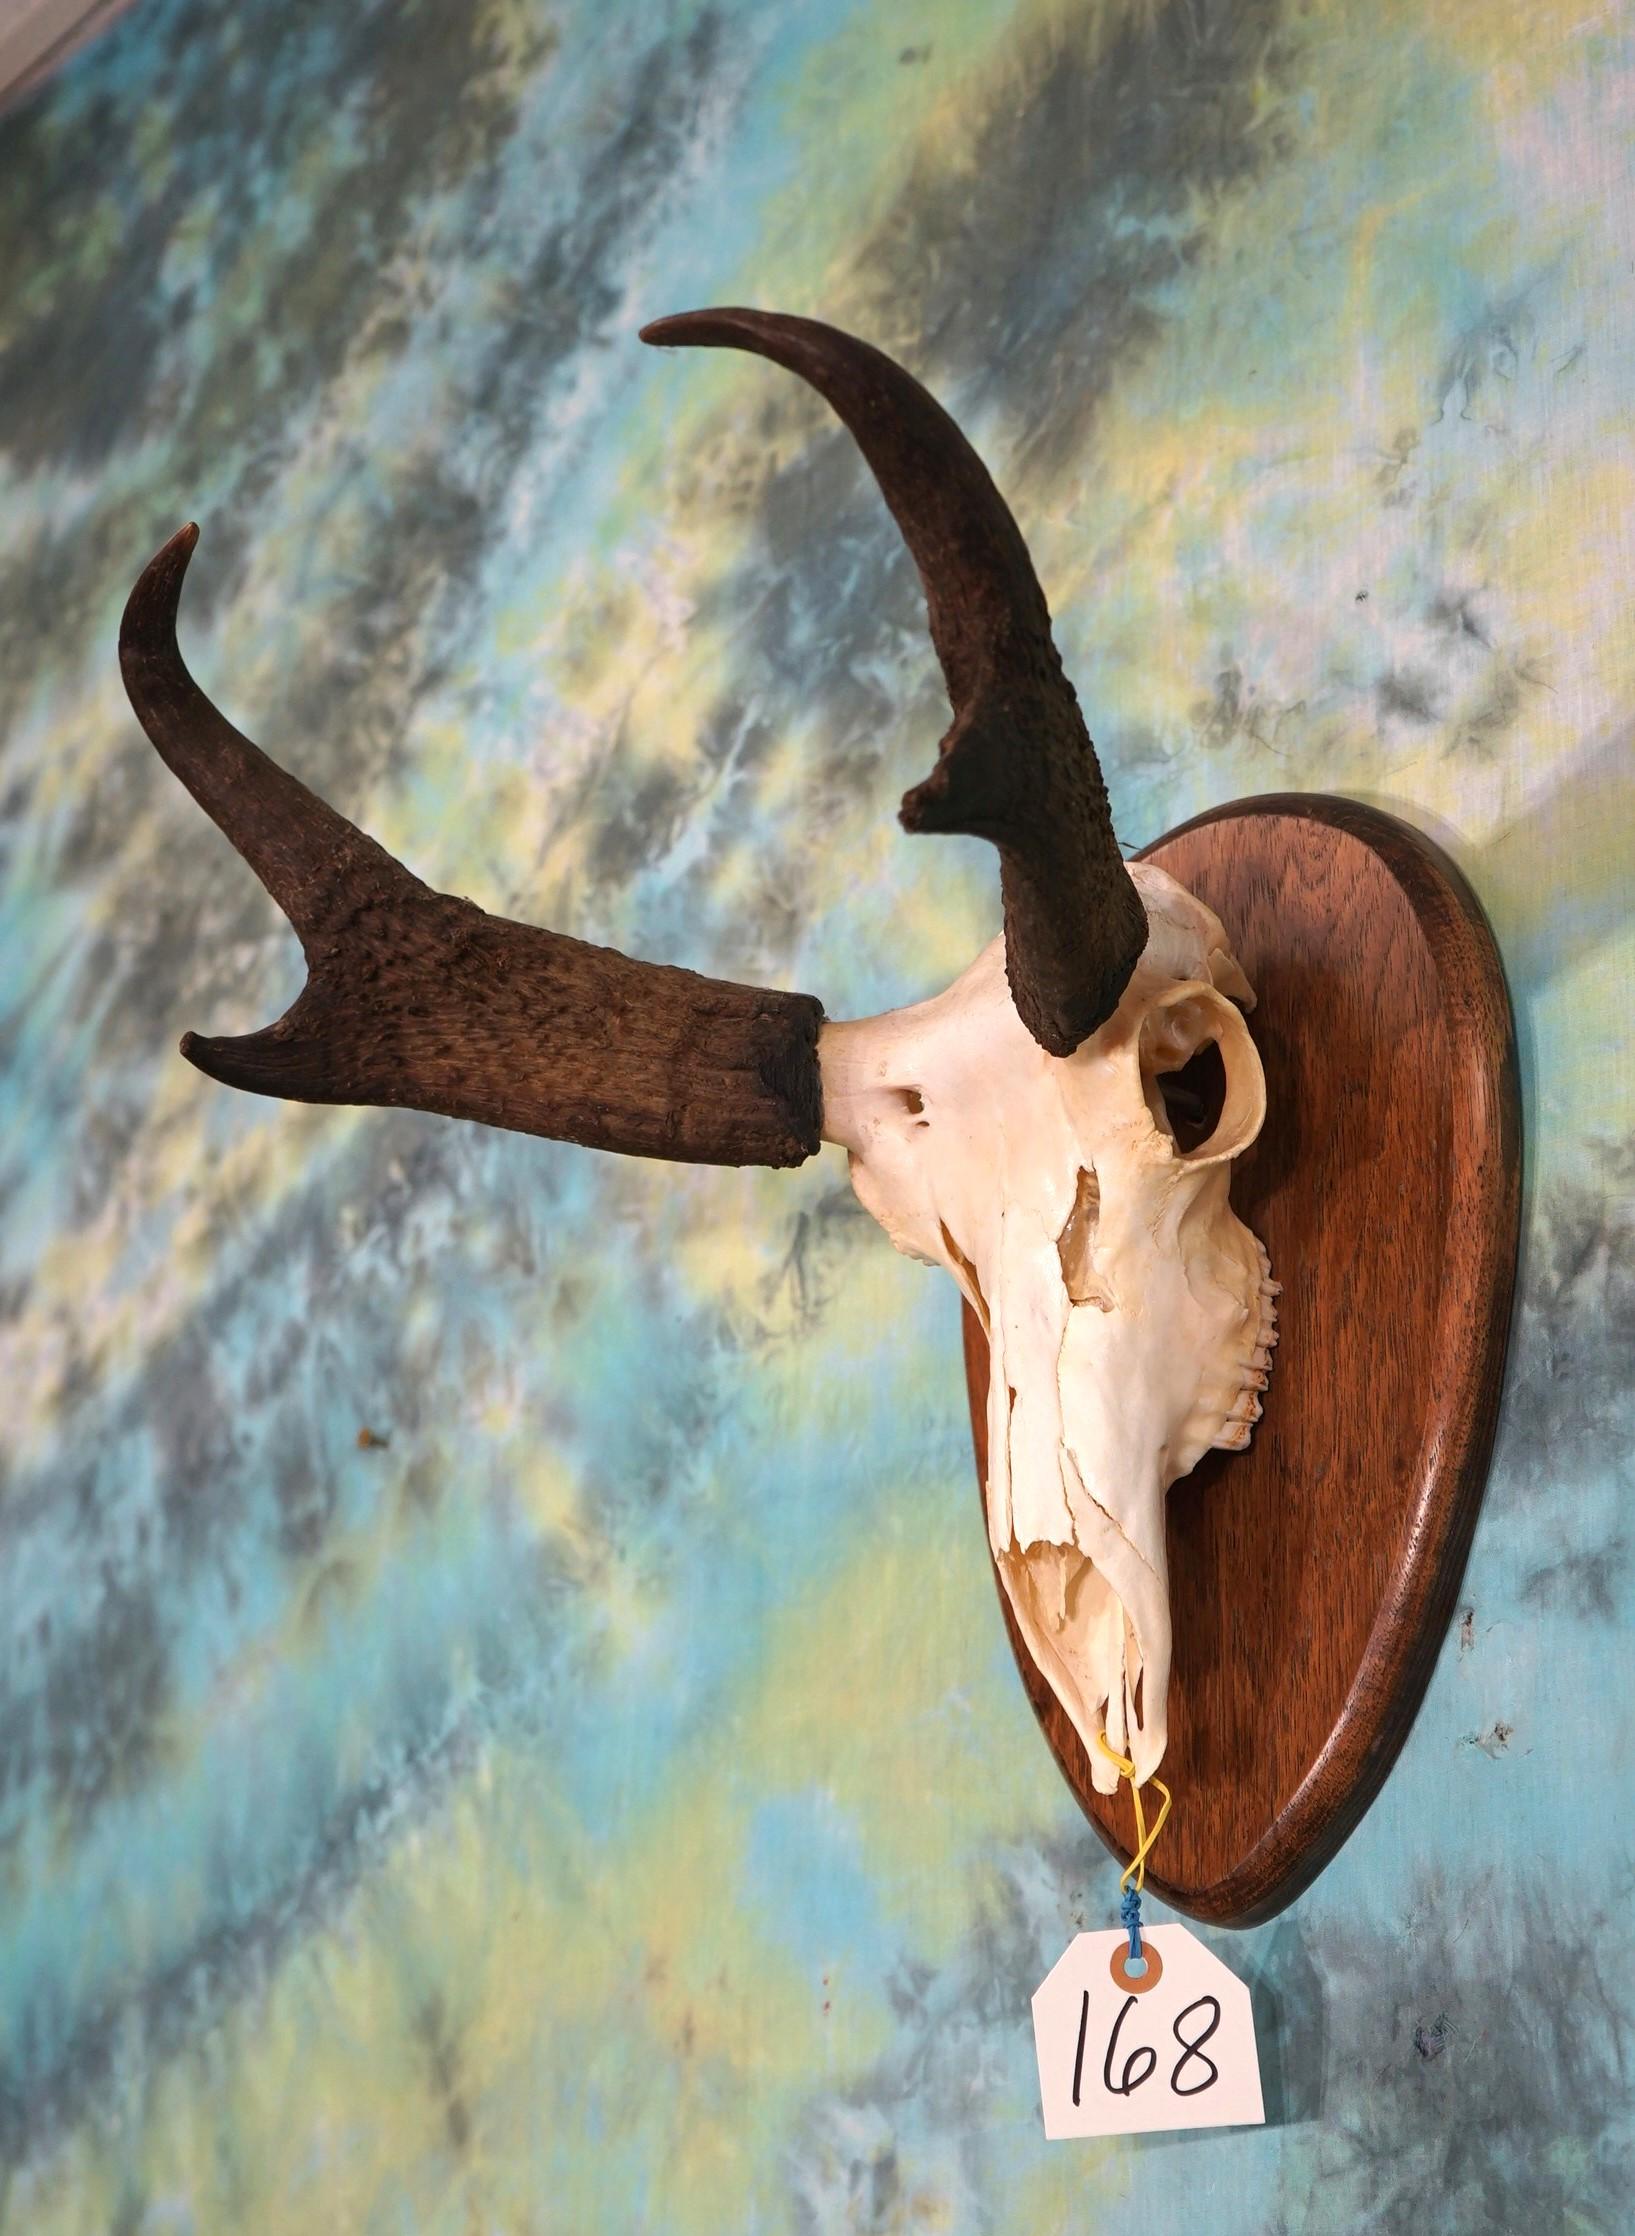 Pronghorn Antelope Skull on Panel Taxidermy